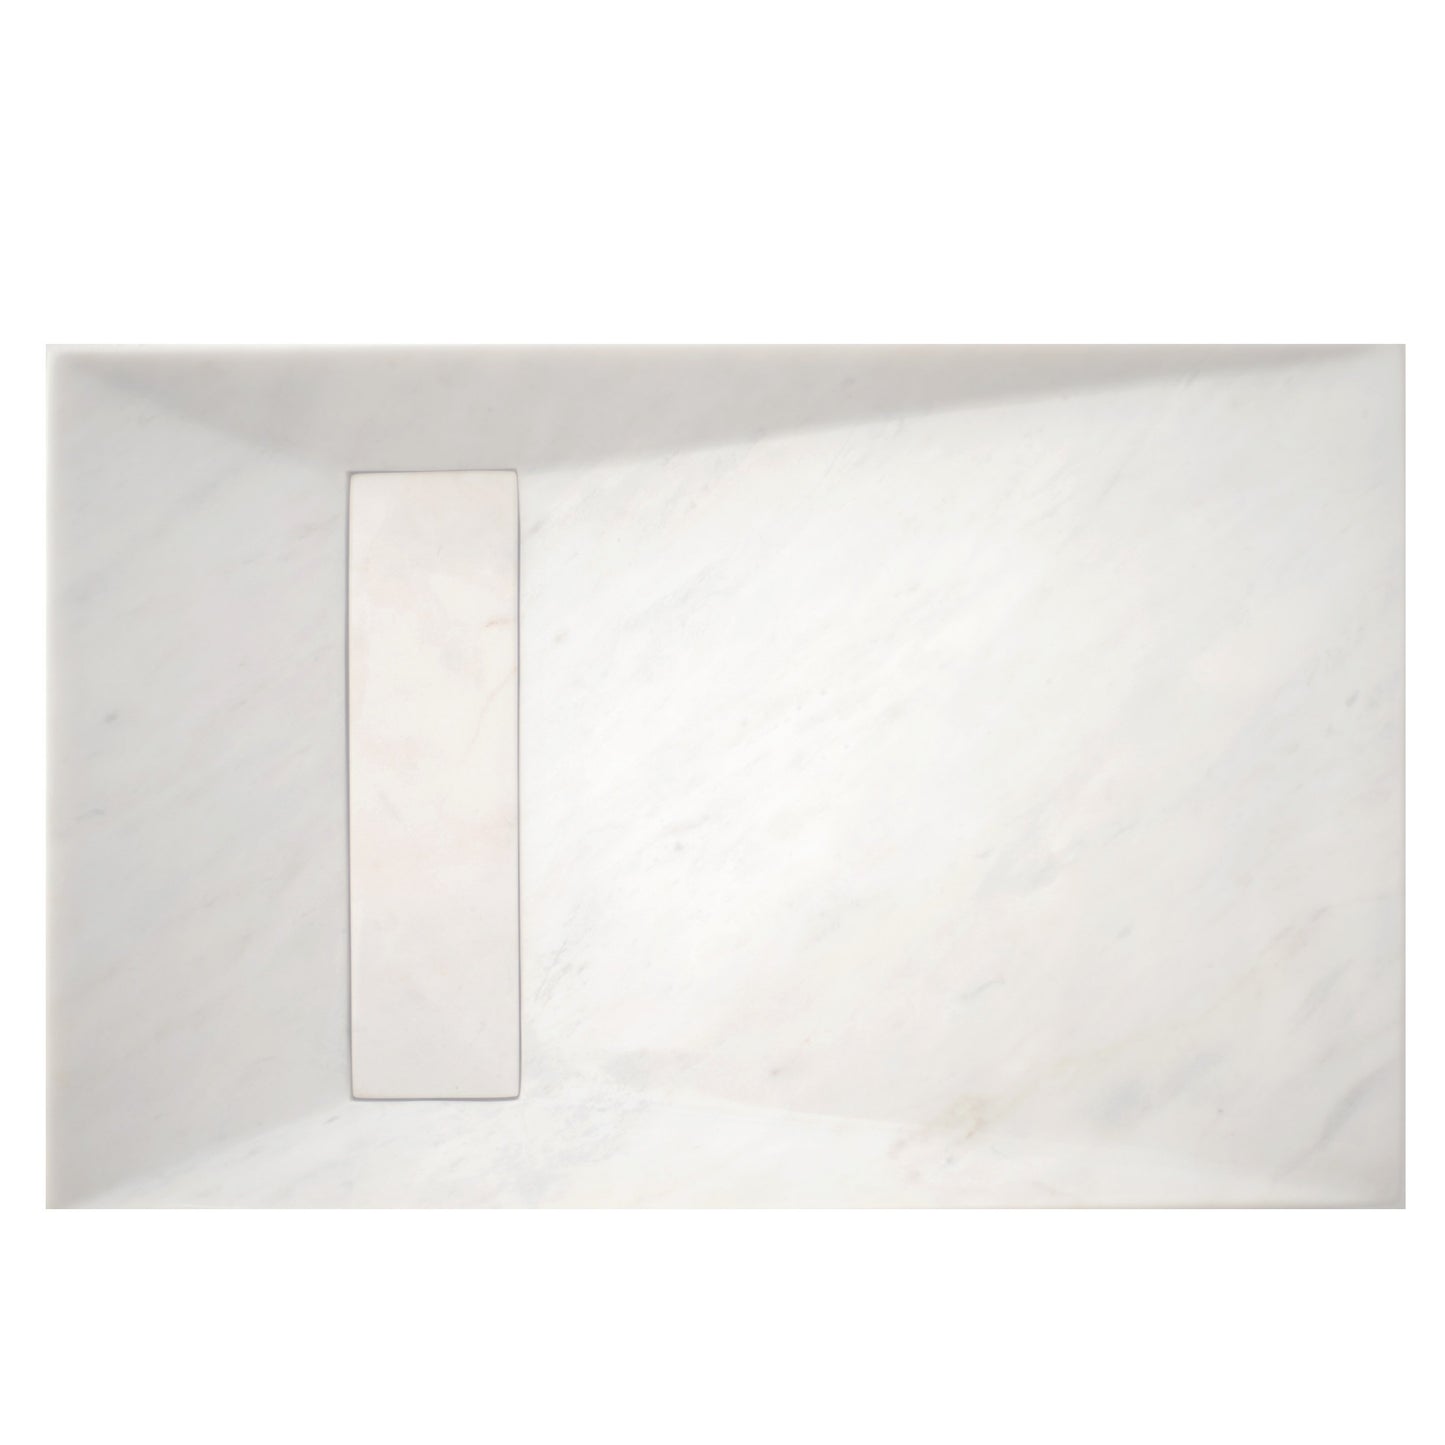 Eviva Slope 21 in. White Carrara Marble Vessel Sink - Luxe Bathroom Vanities Luxury Bathroom Fixtures Bathroom Furniture